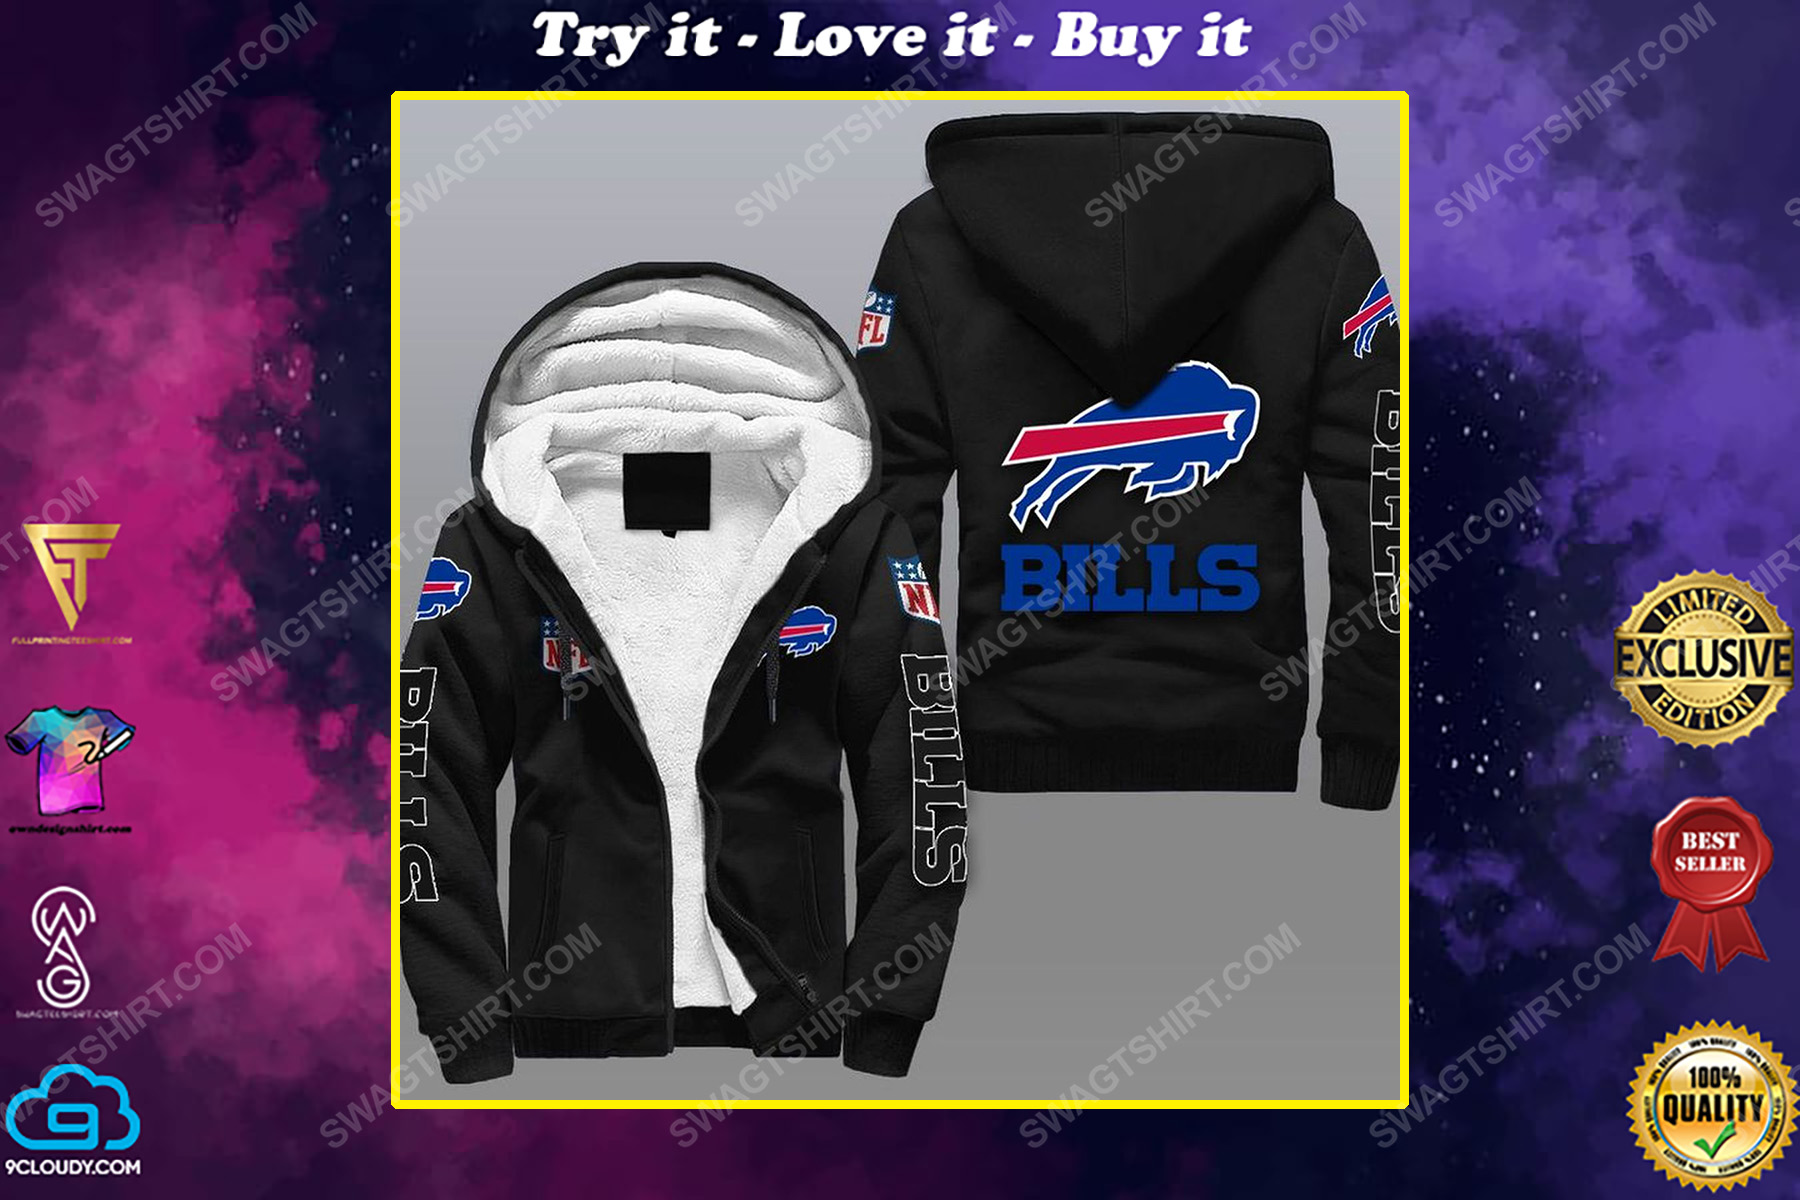 Buffalo bills america's team full print shirt